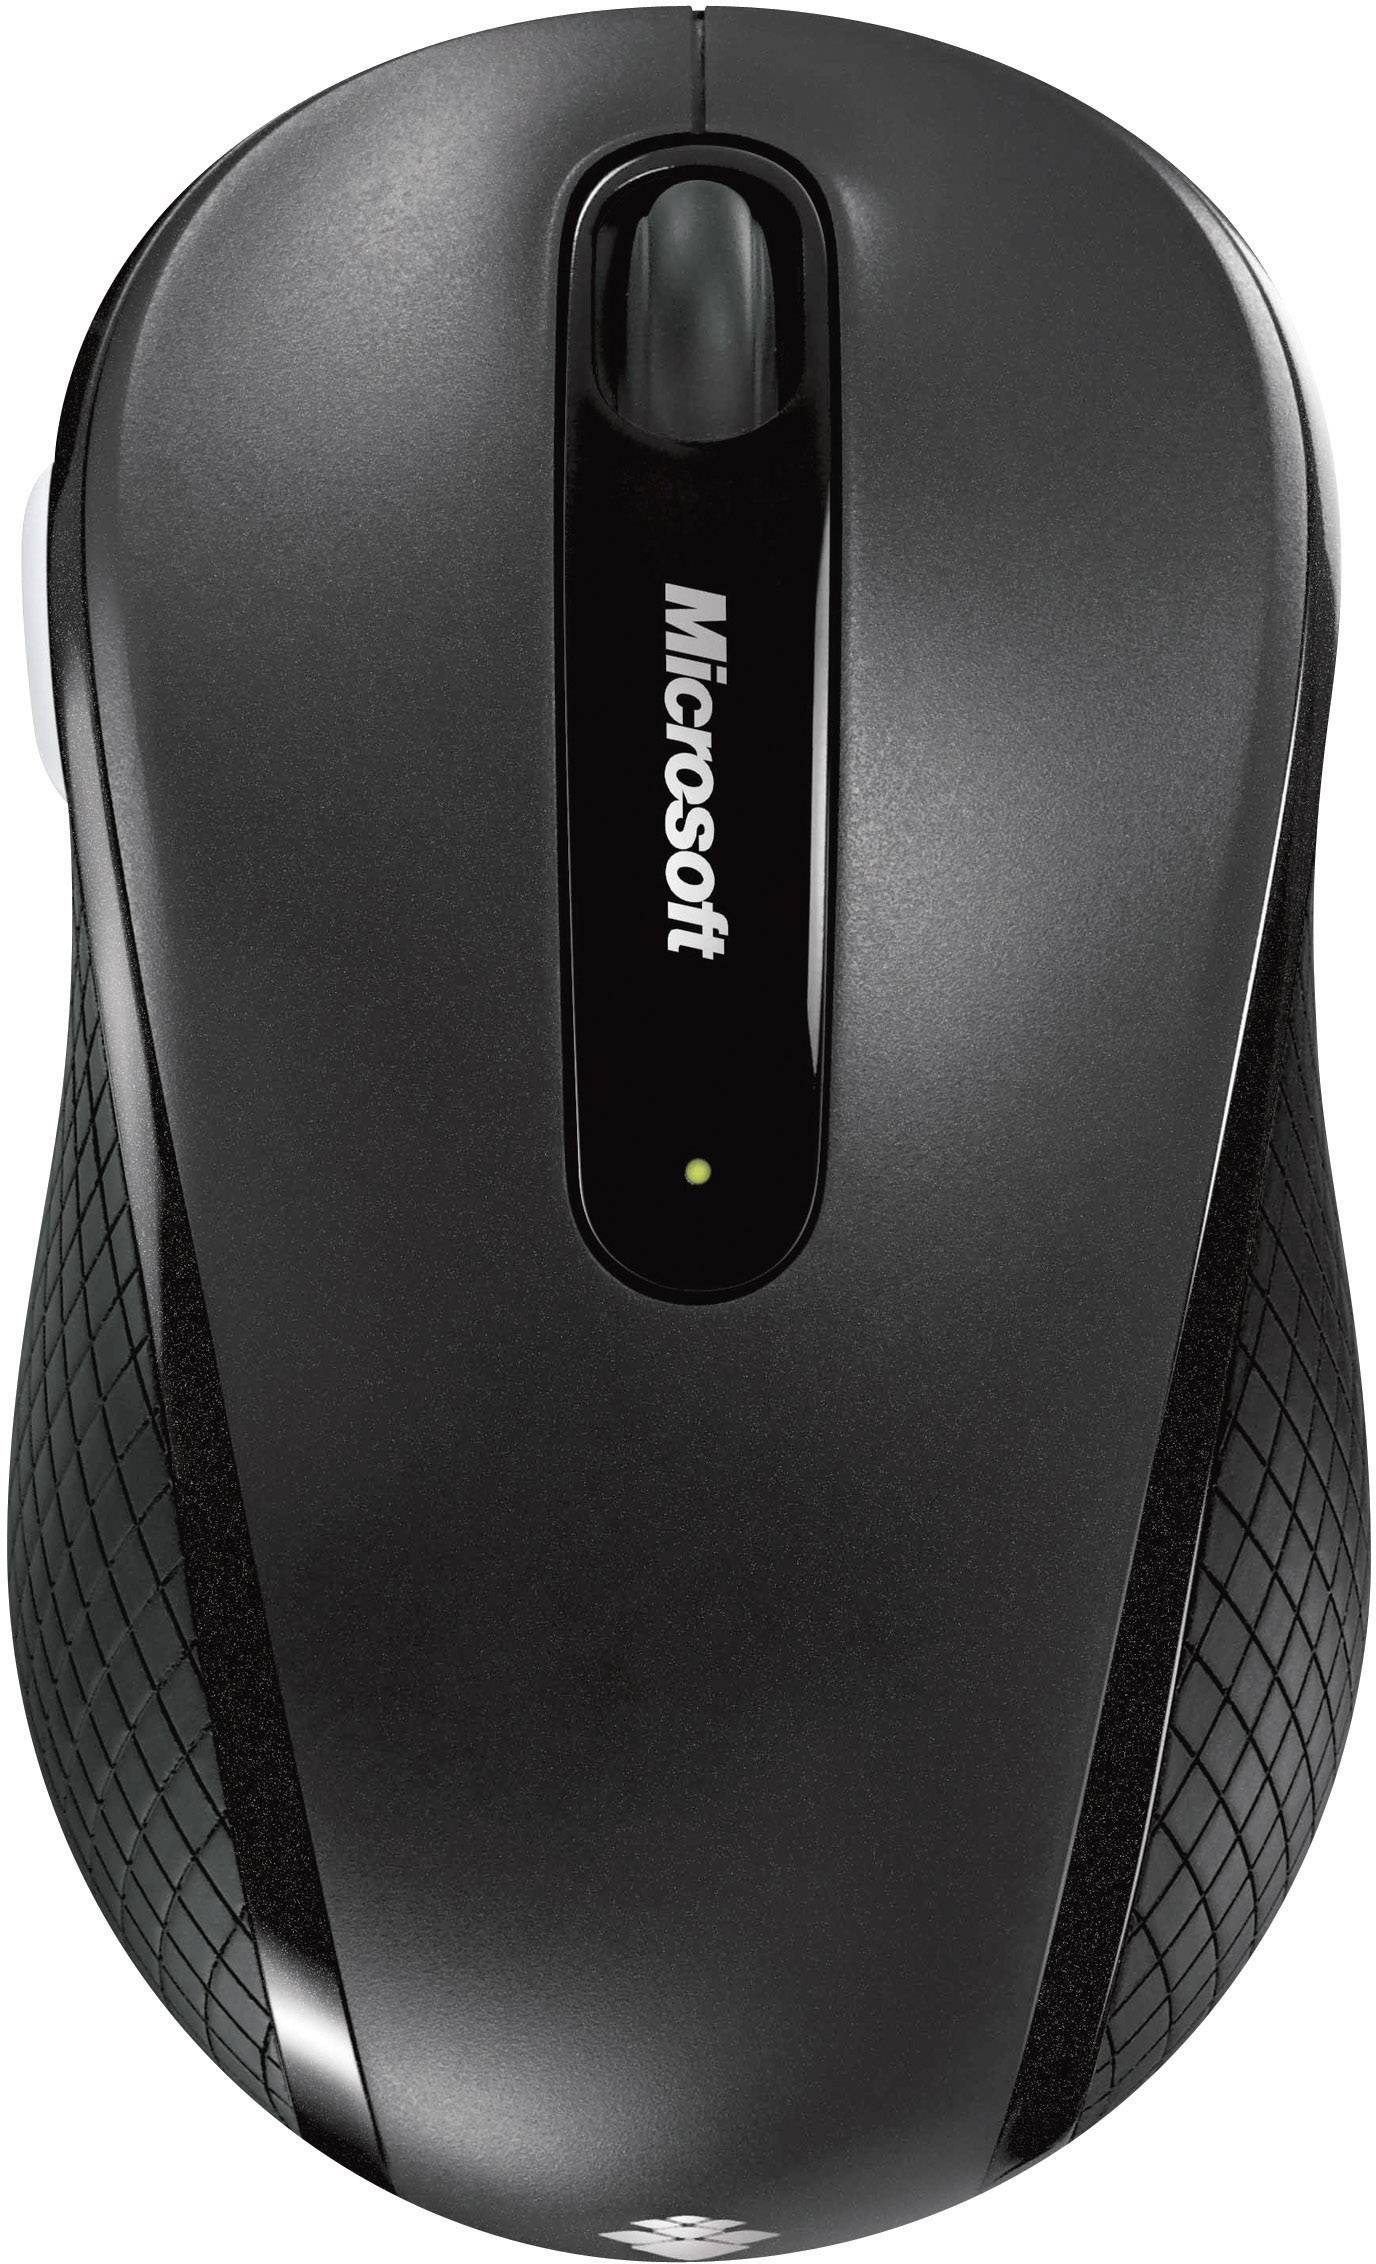 Microsoft Wireless Mobile Mouse 4000 Wireless mouse Radio Optical Black Buttons 1000 dpi | Conrad.com